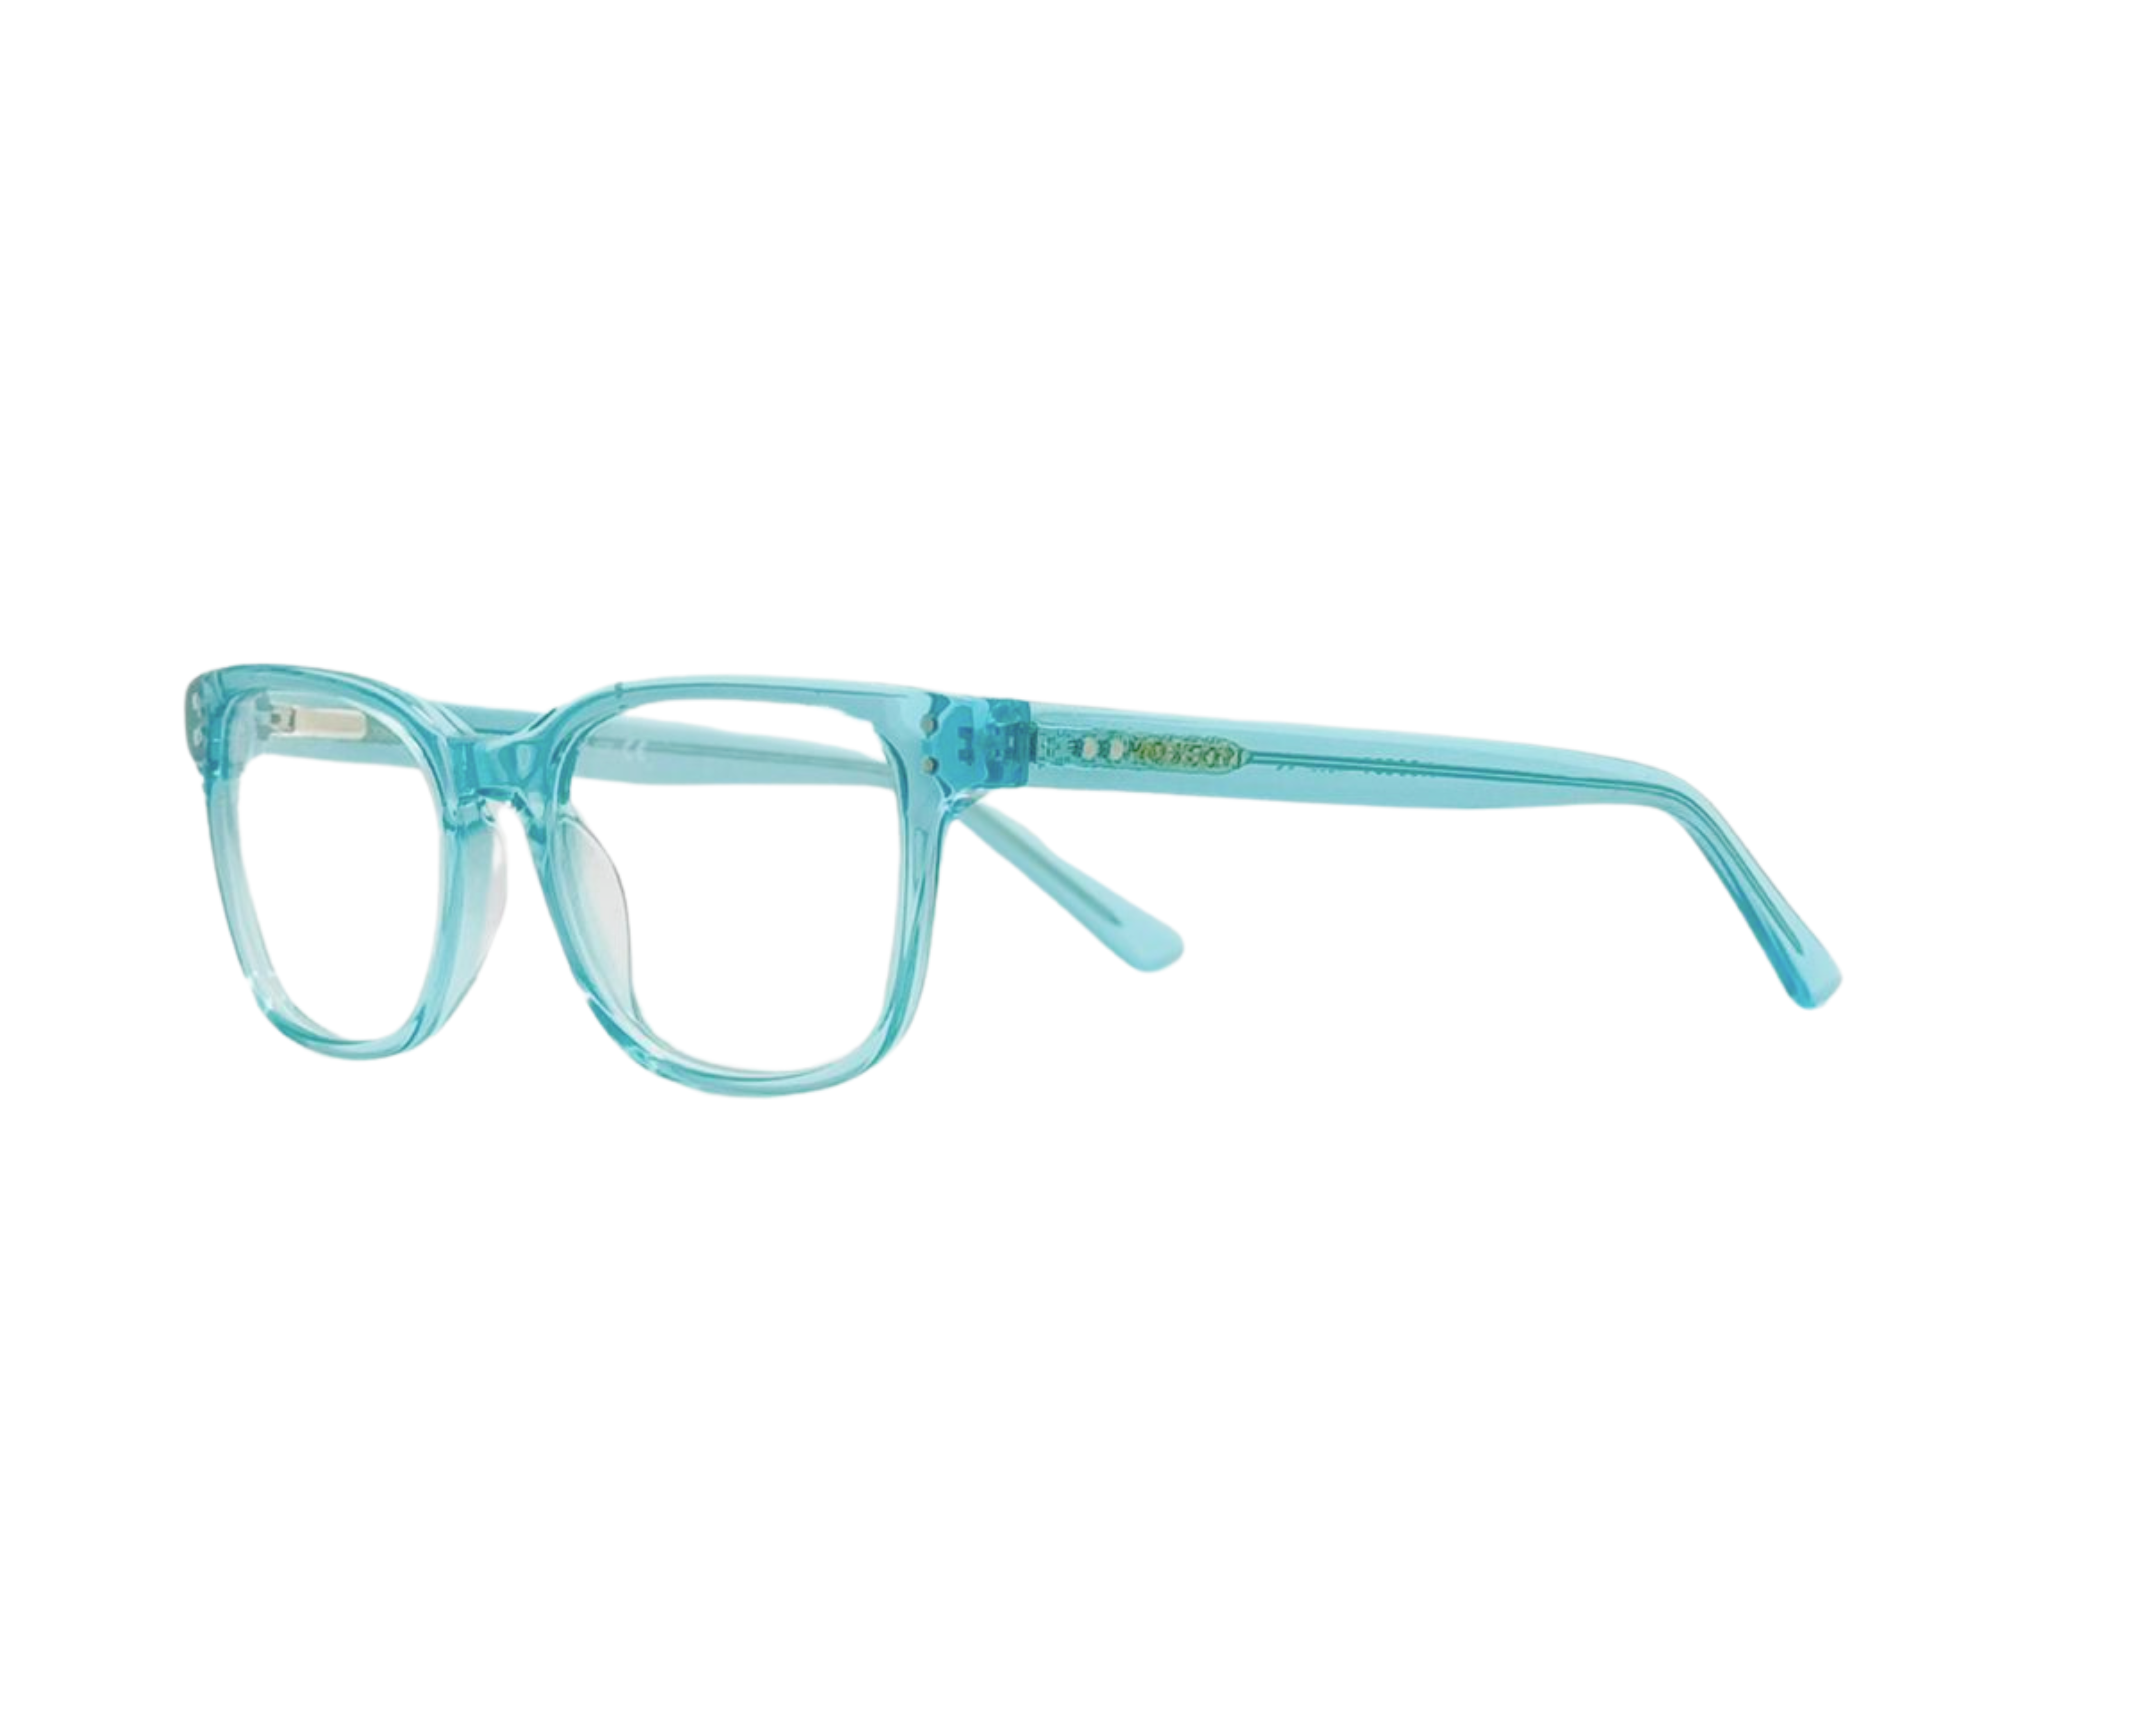 NS Luxury - J08 - Teal - Eyeglasses